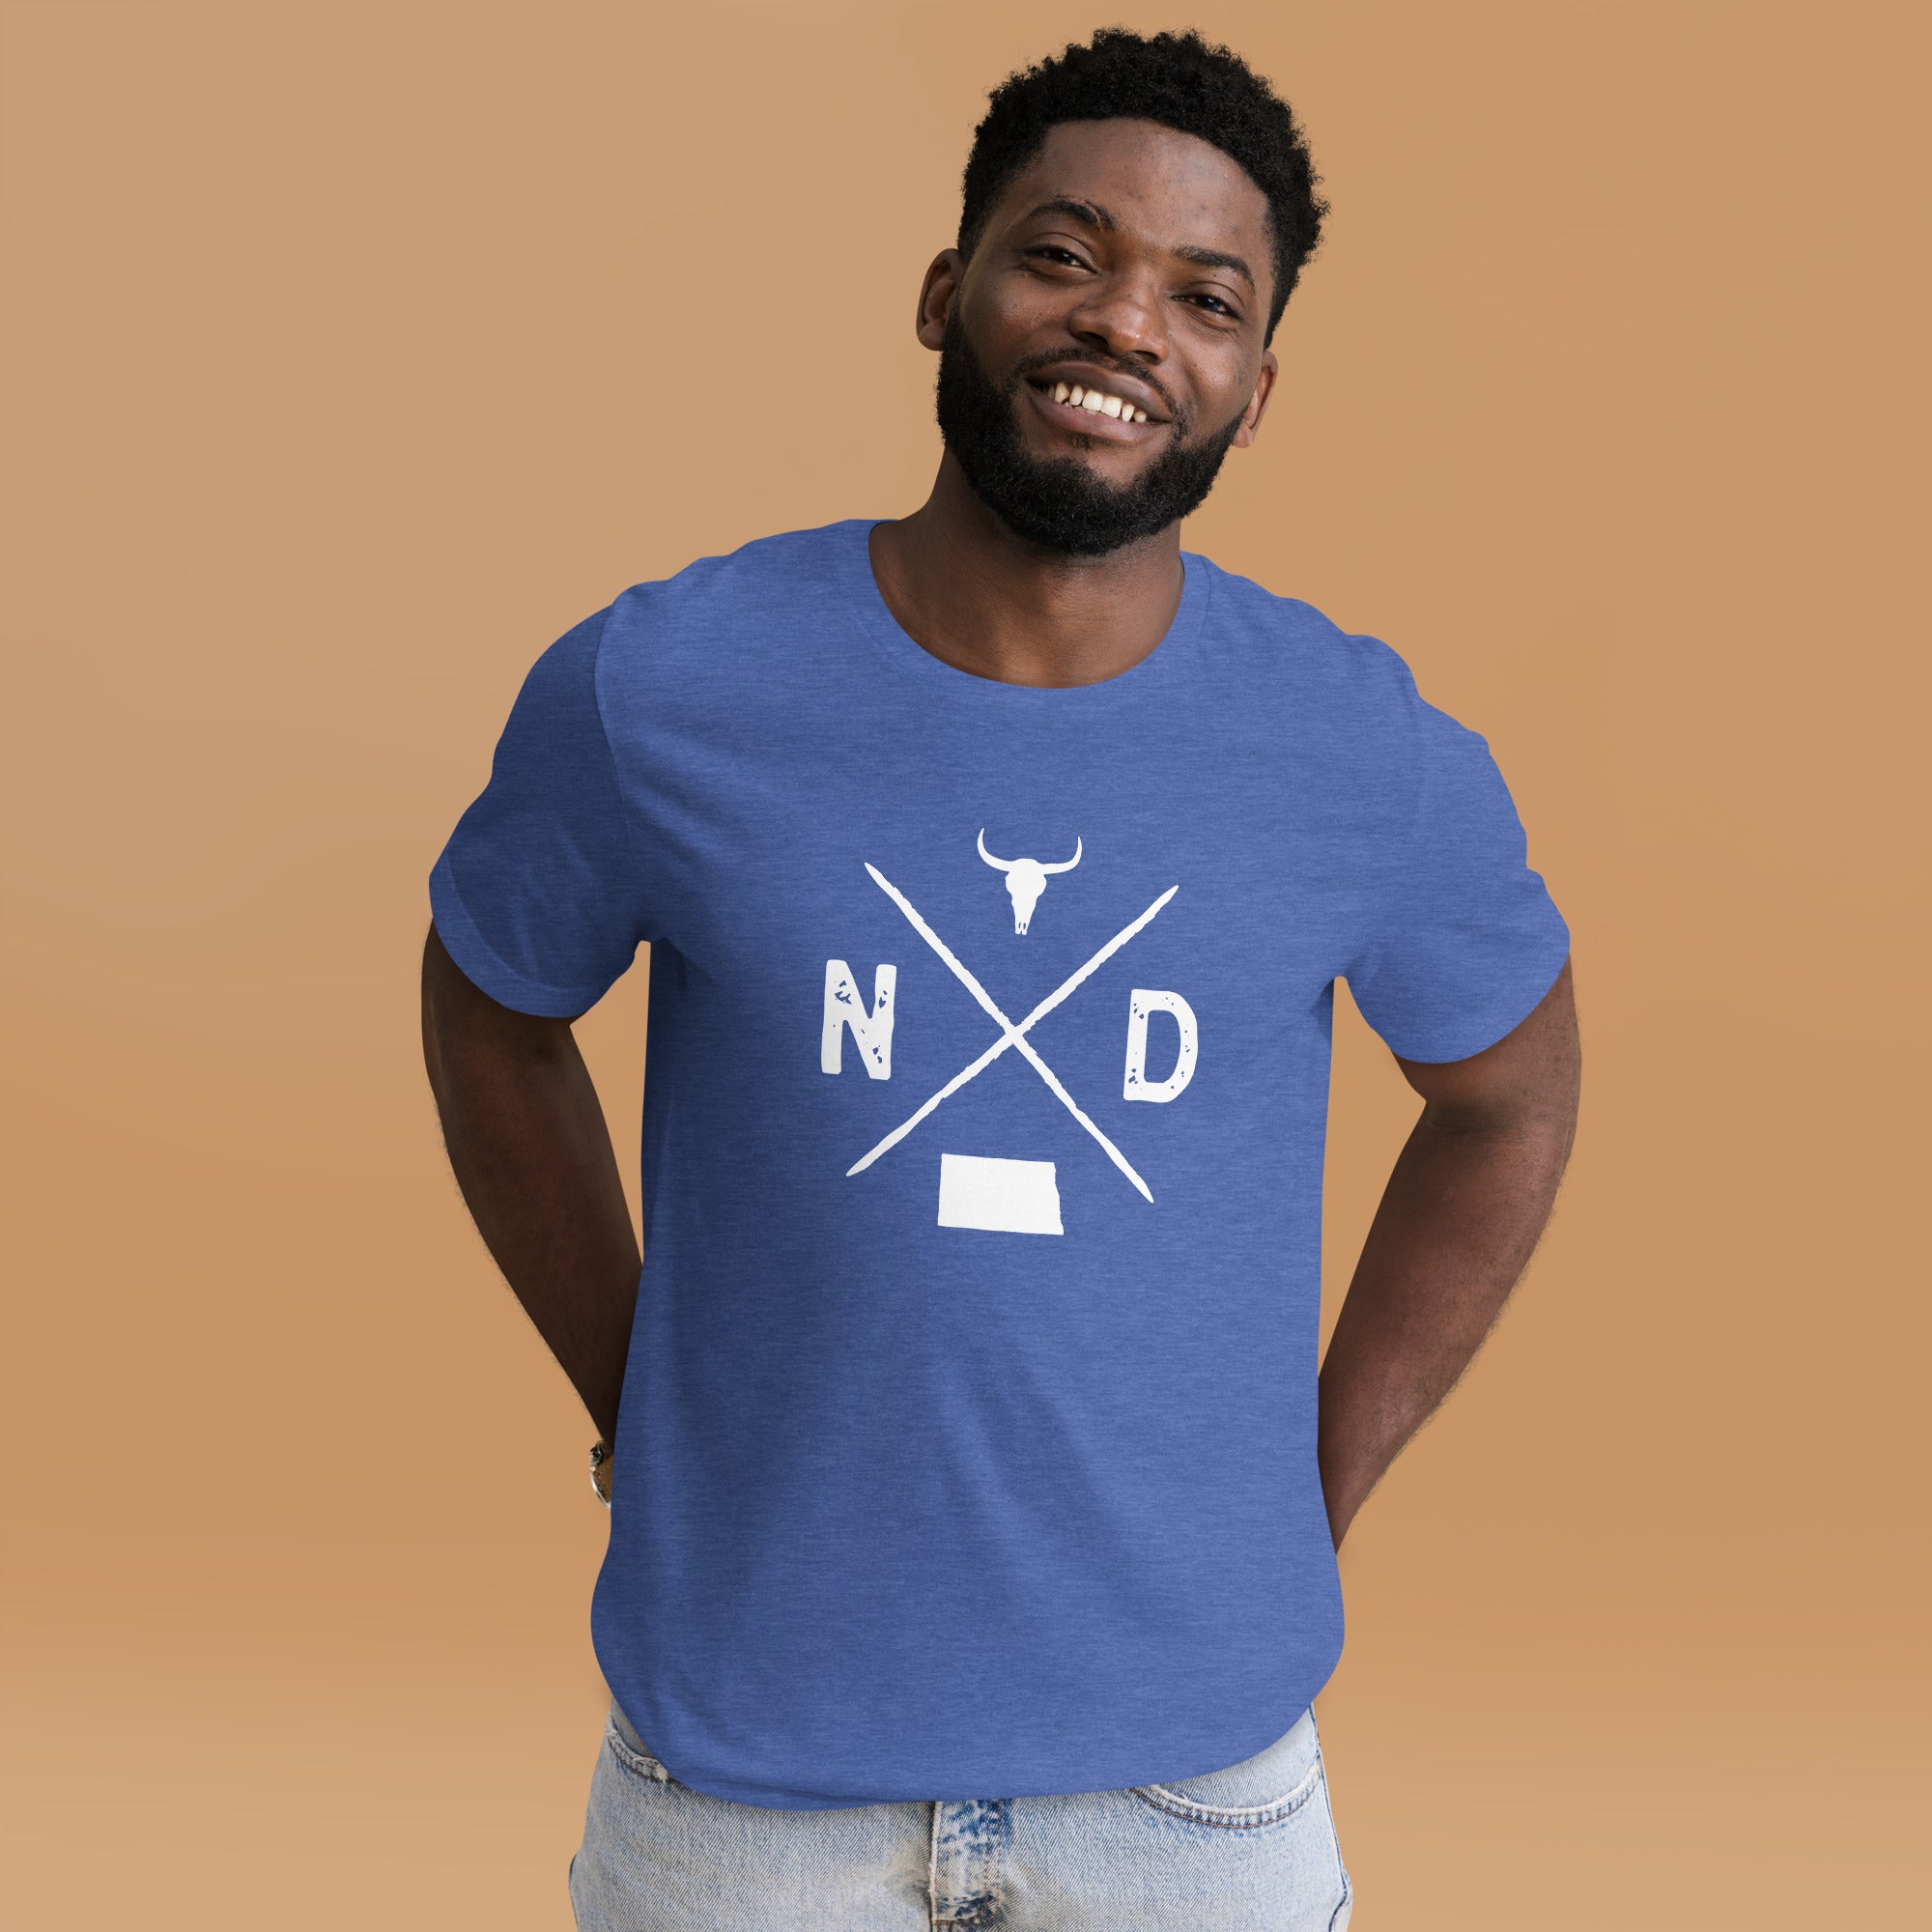 unisex-staple-t-shirt-heather-true-royal-front-2-6503273900f56.jpg